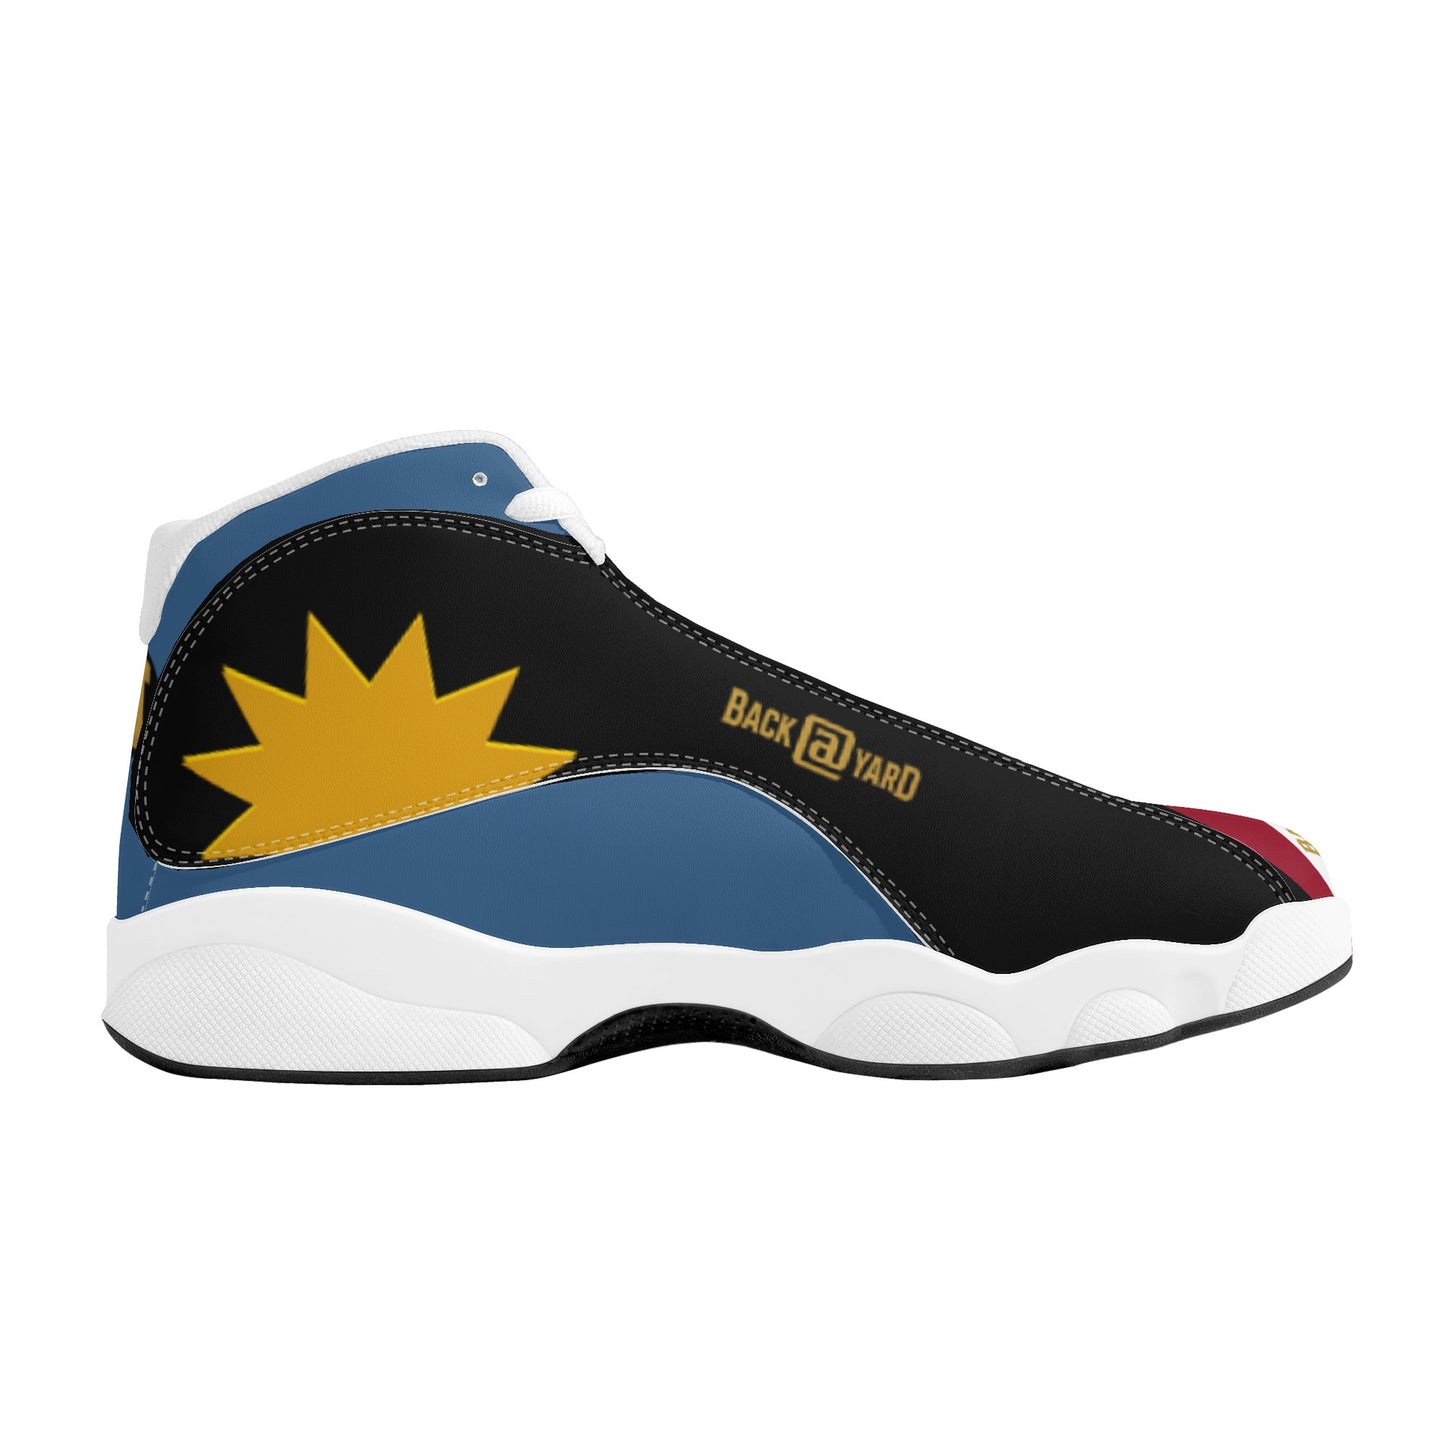 Women's White Soles Basketball Shoes - Antigua & Barbuda